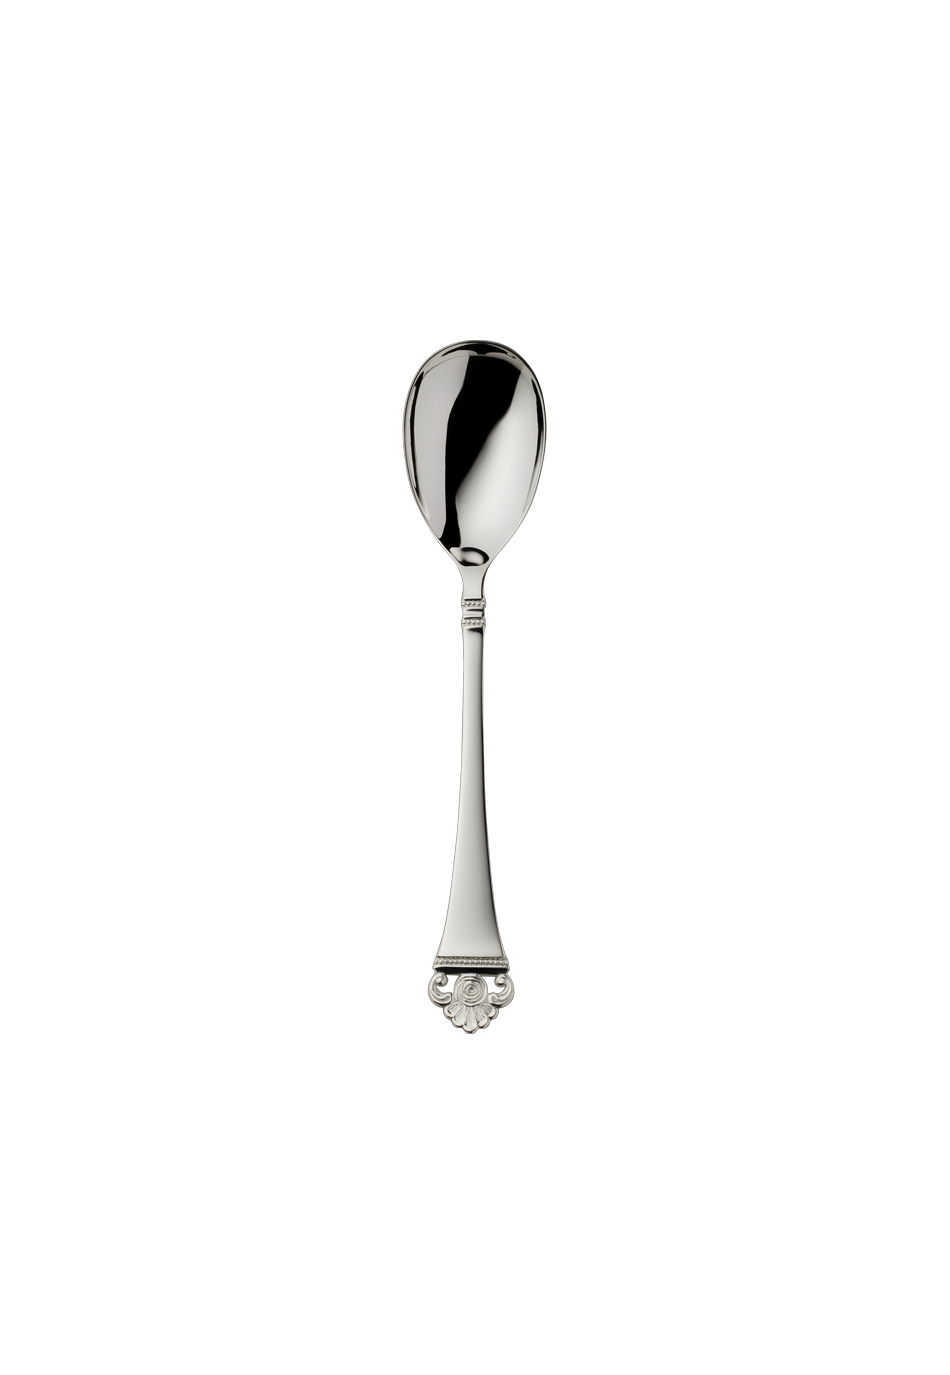 Rosenmuster Ice-Cream Spoon (150g massive silverplated)